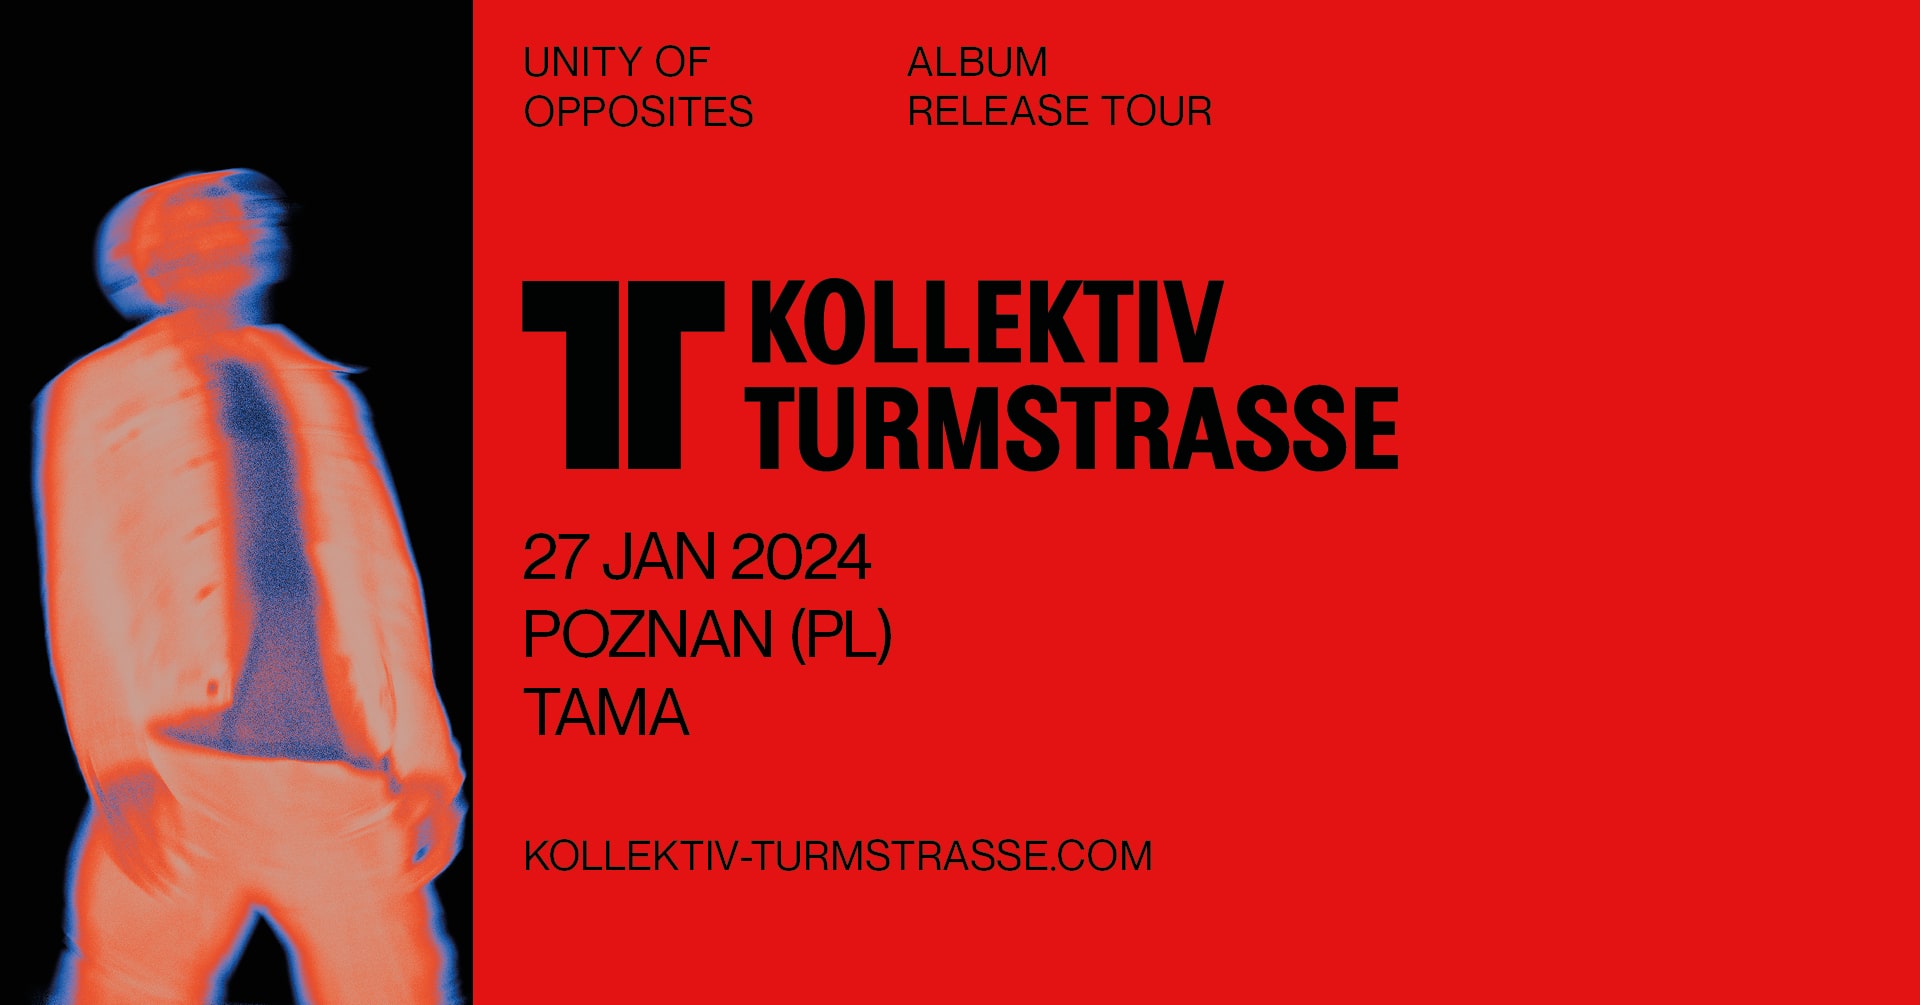 Kollektiv Turmstrasse: Unity of Opposites Album Release Tour